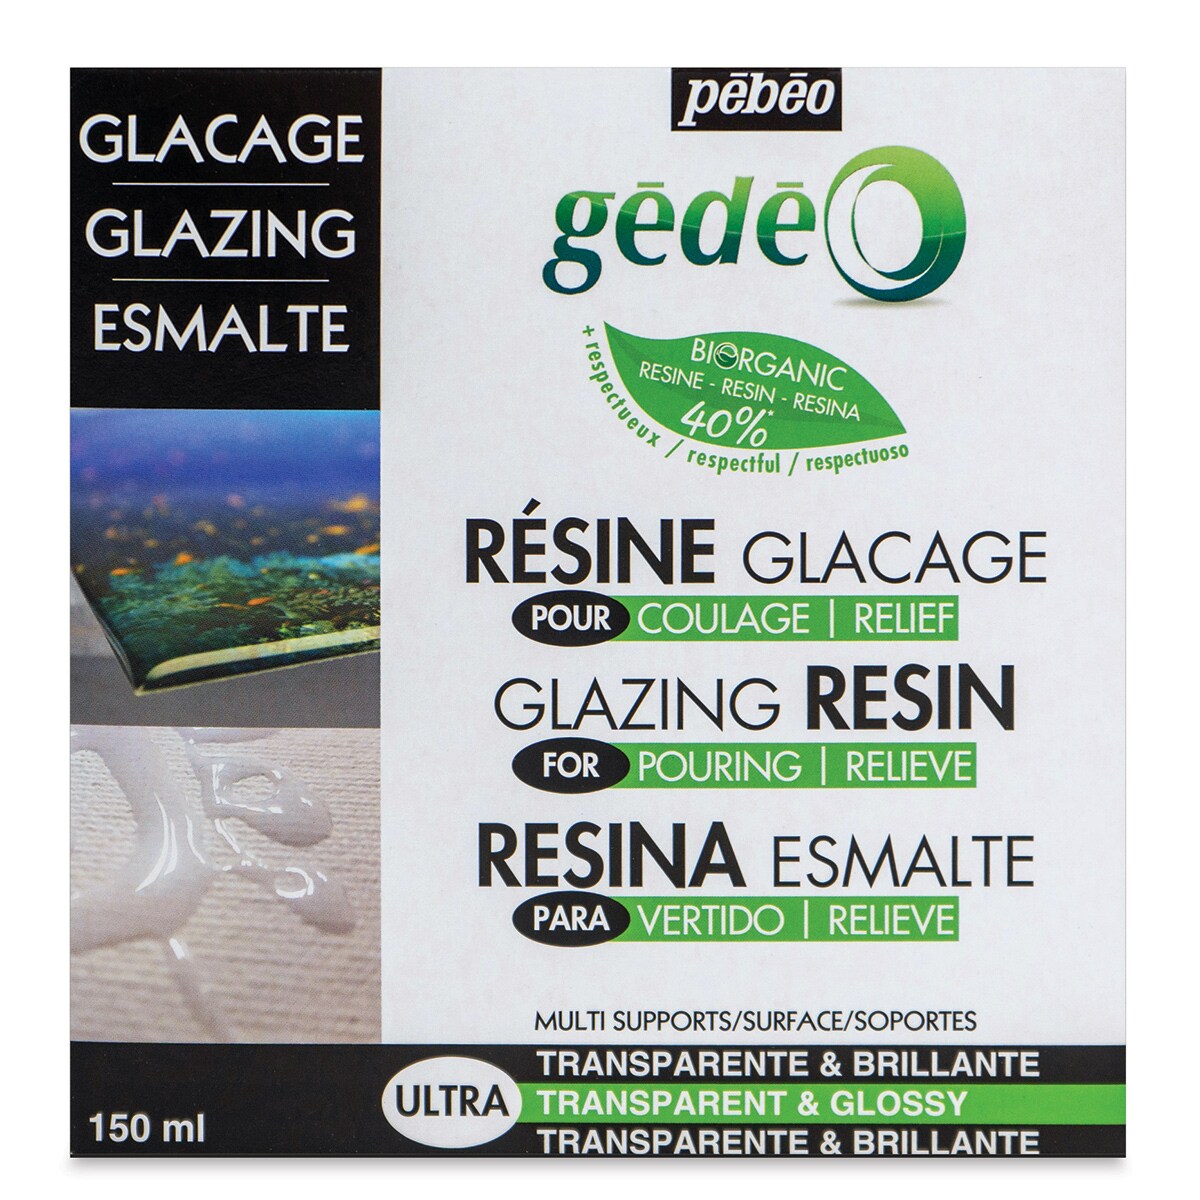 Pebeo Gedeo Bio-Based Resin - Glazing Resin, 150 ml